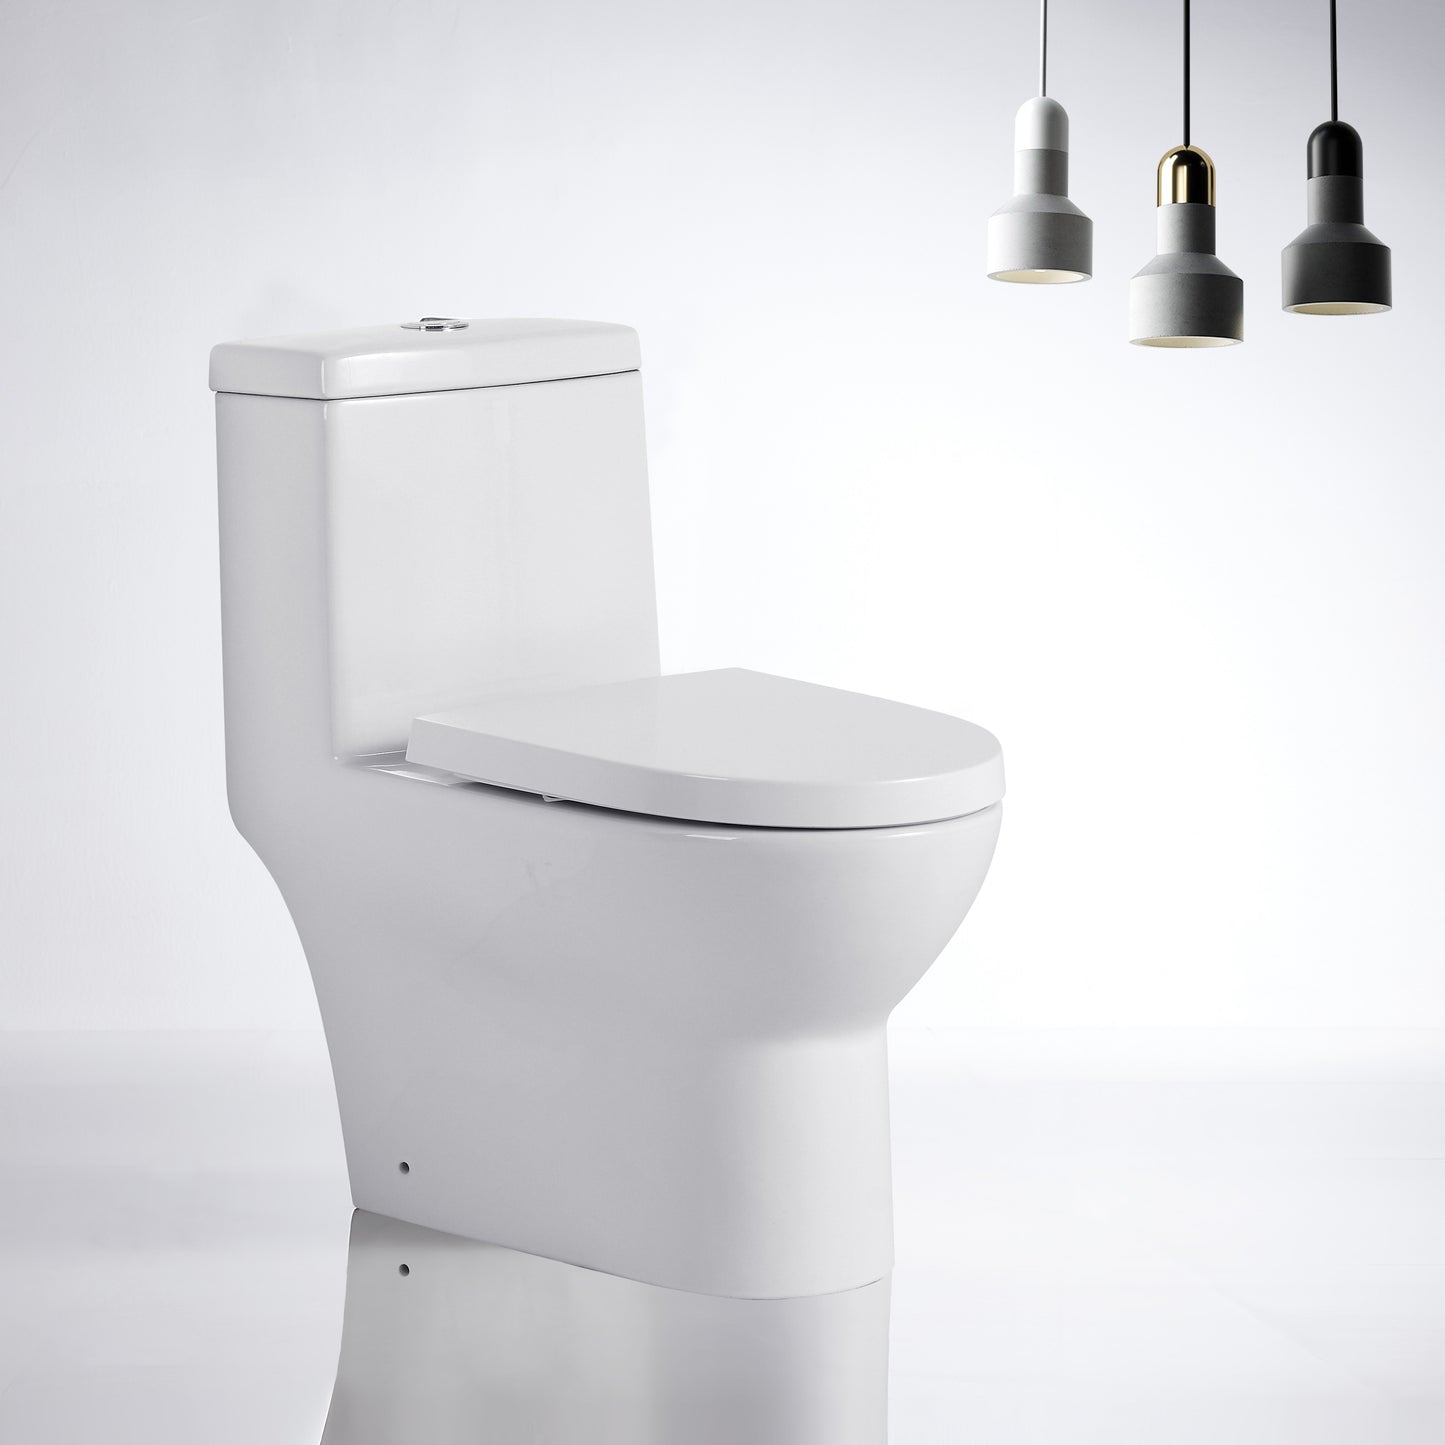 Ceramic One Piece Toilet 28 Inch Length With Soft Close Seat(G-lemon SKU:BTC153MOWH)